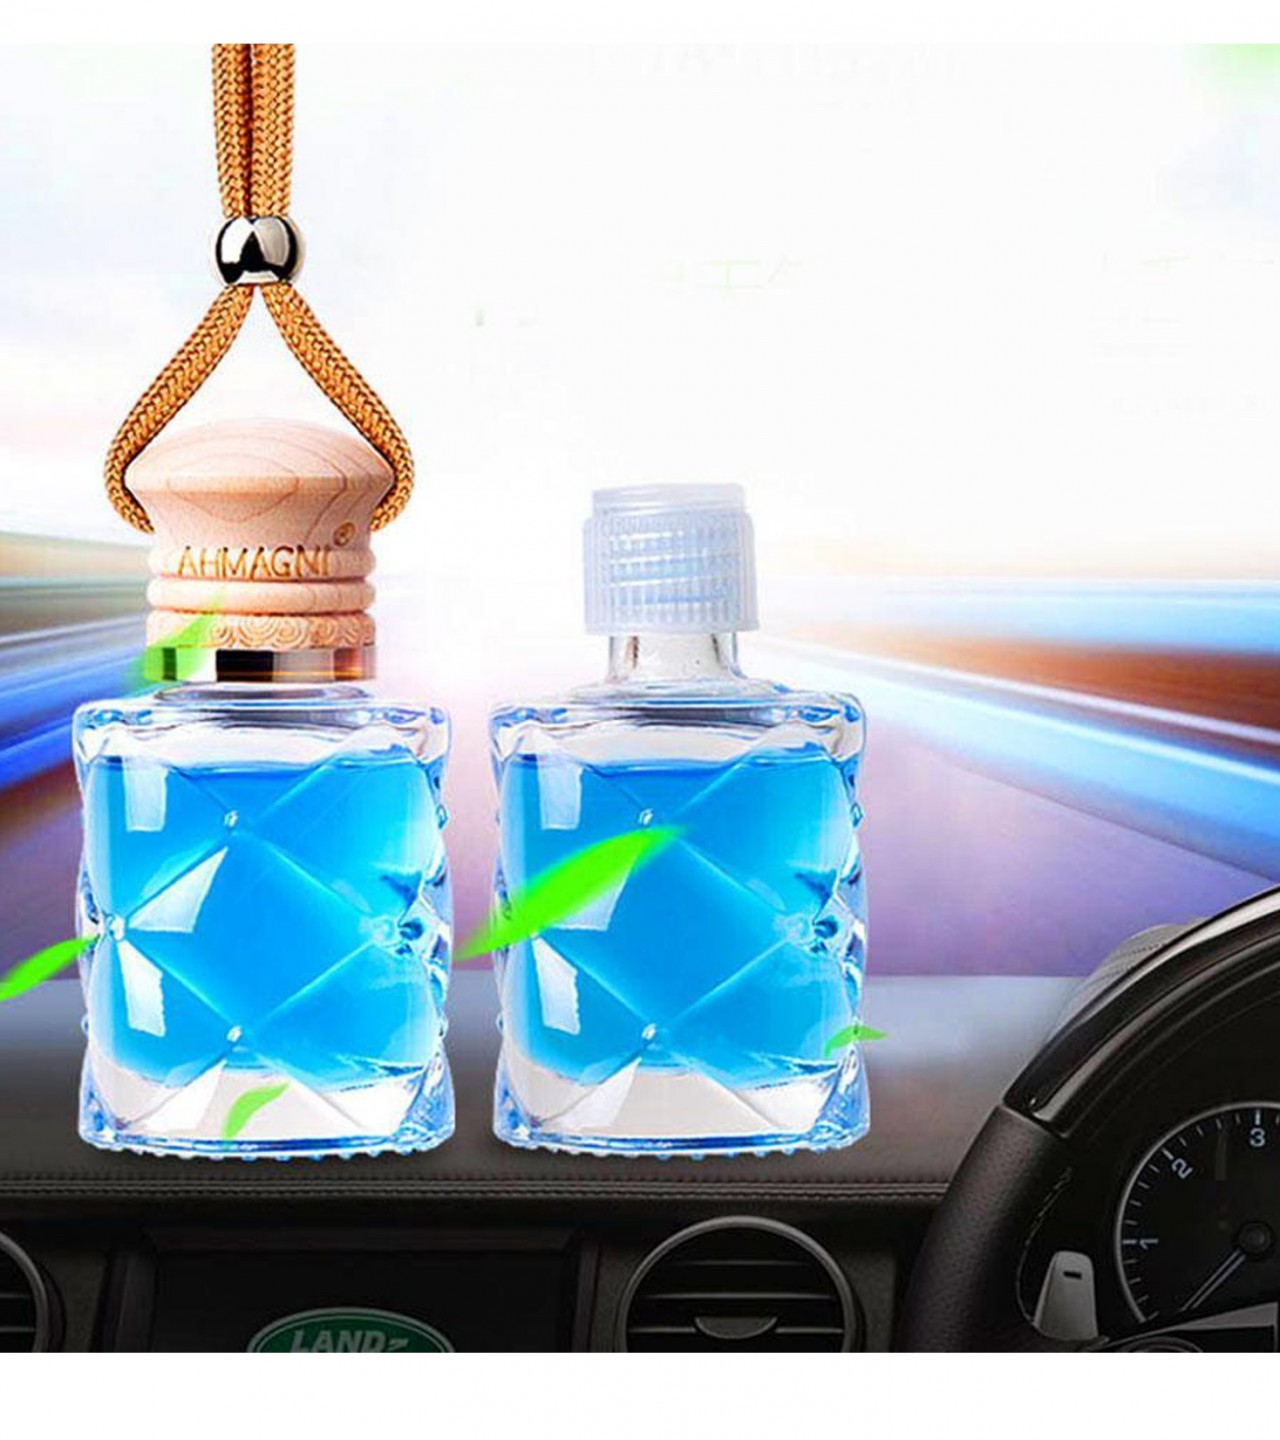 AHMAGNI Car Perfume Oils - Blue - 10 ml Each